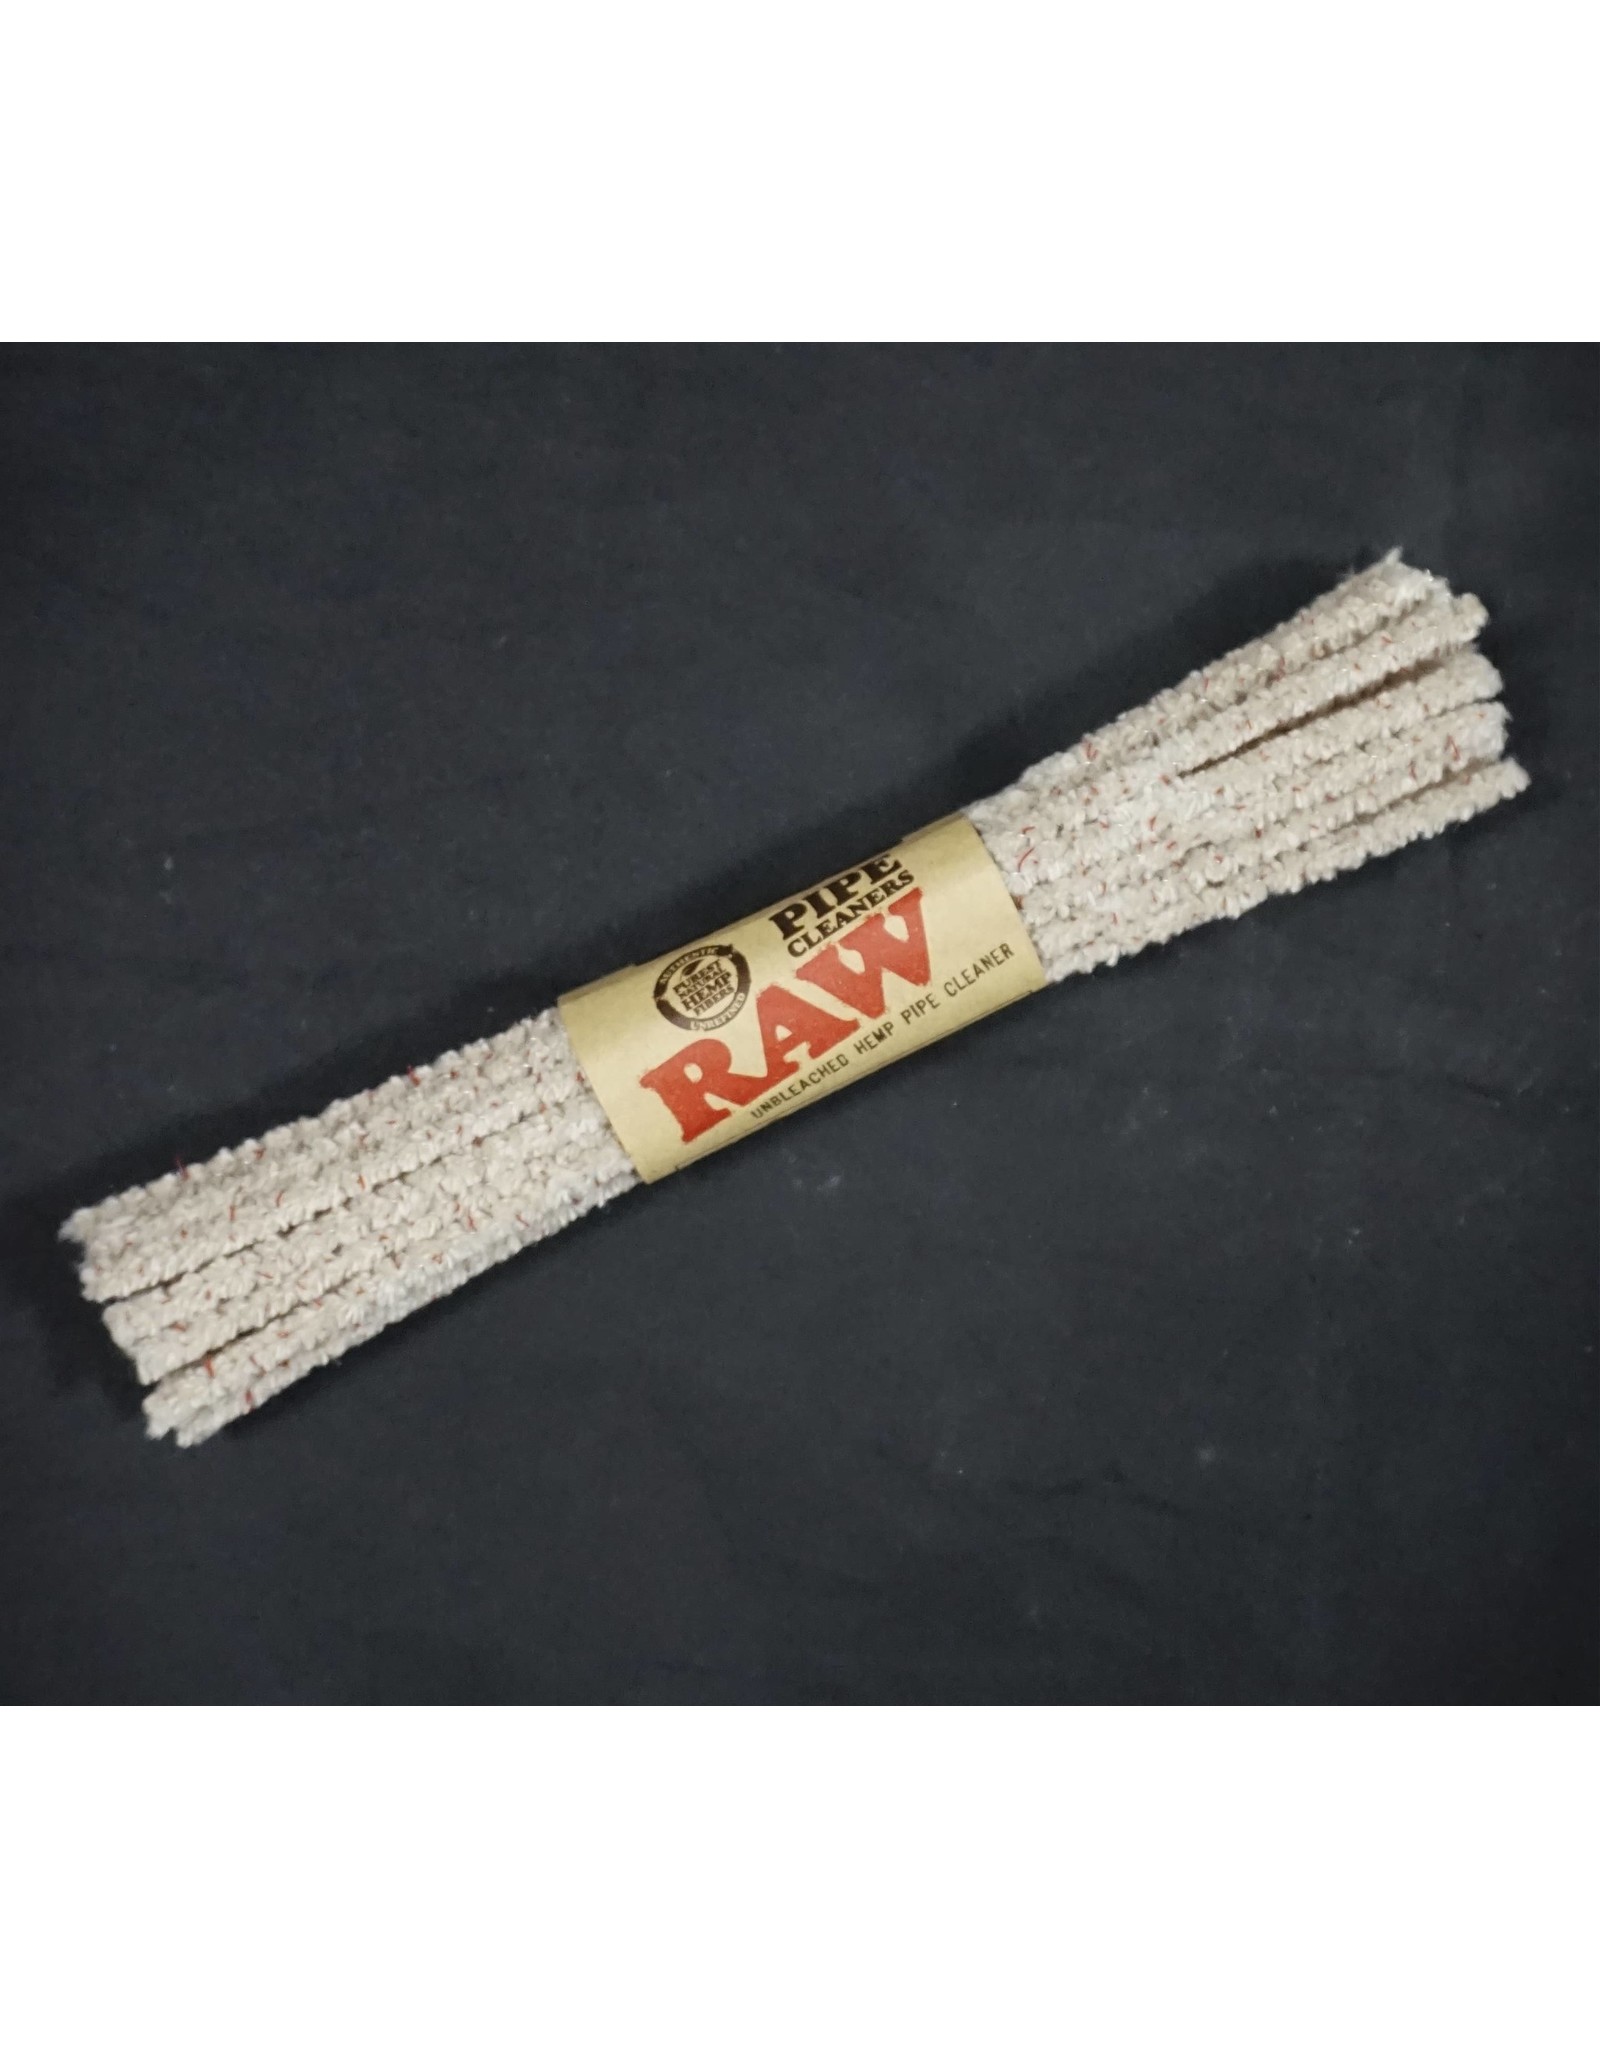 Raw Hemp Pipe Cleaners - Bristle